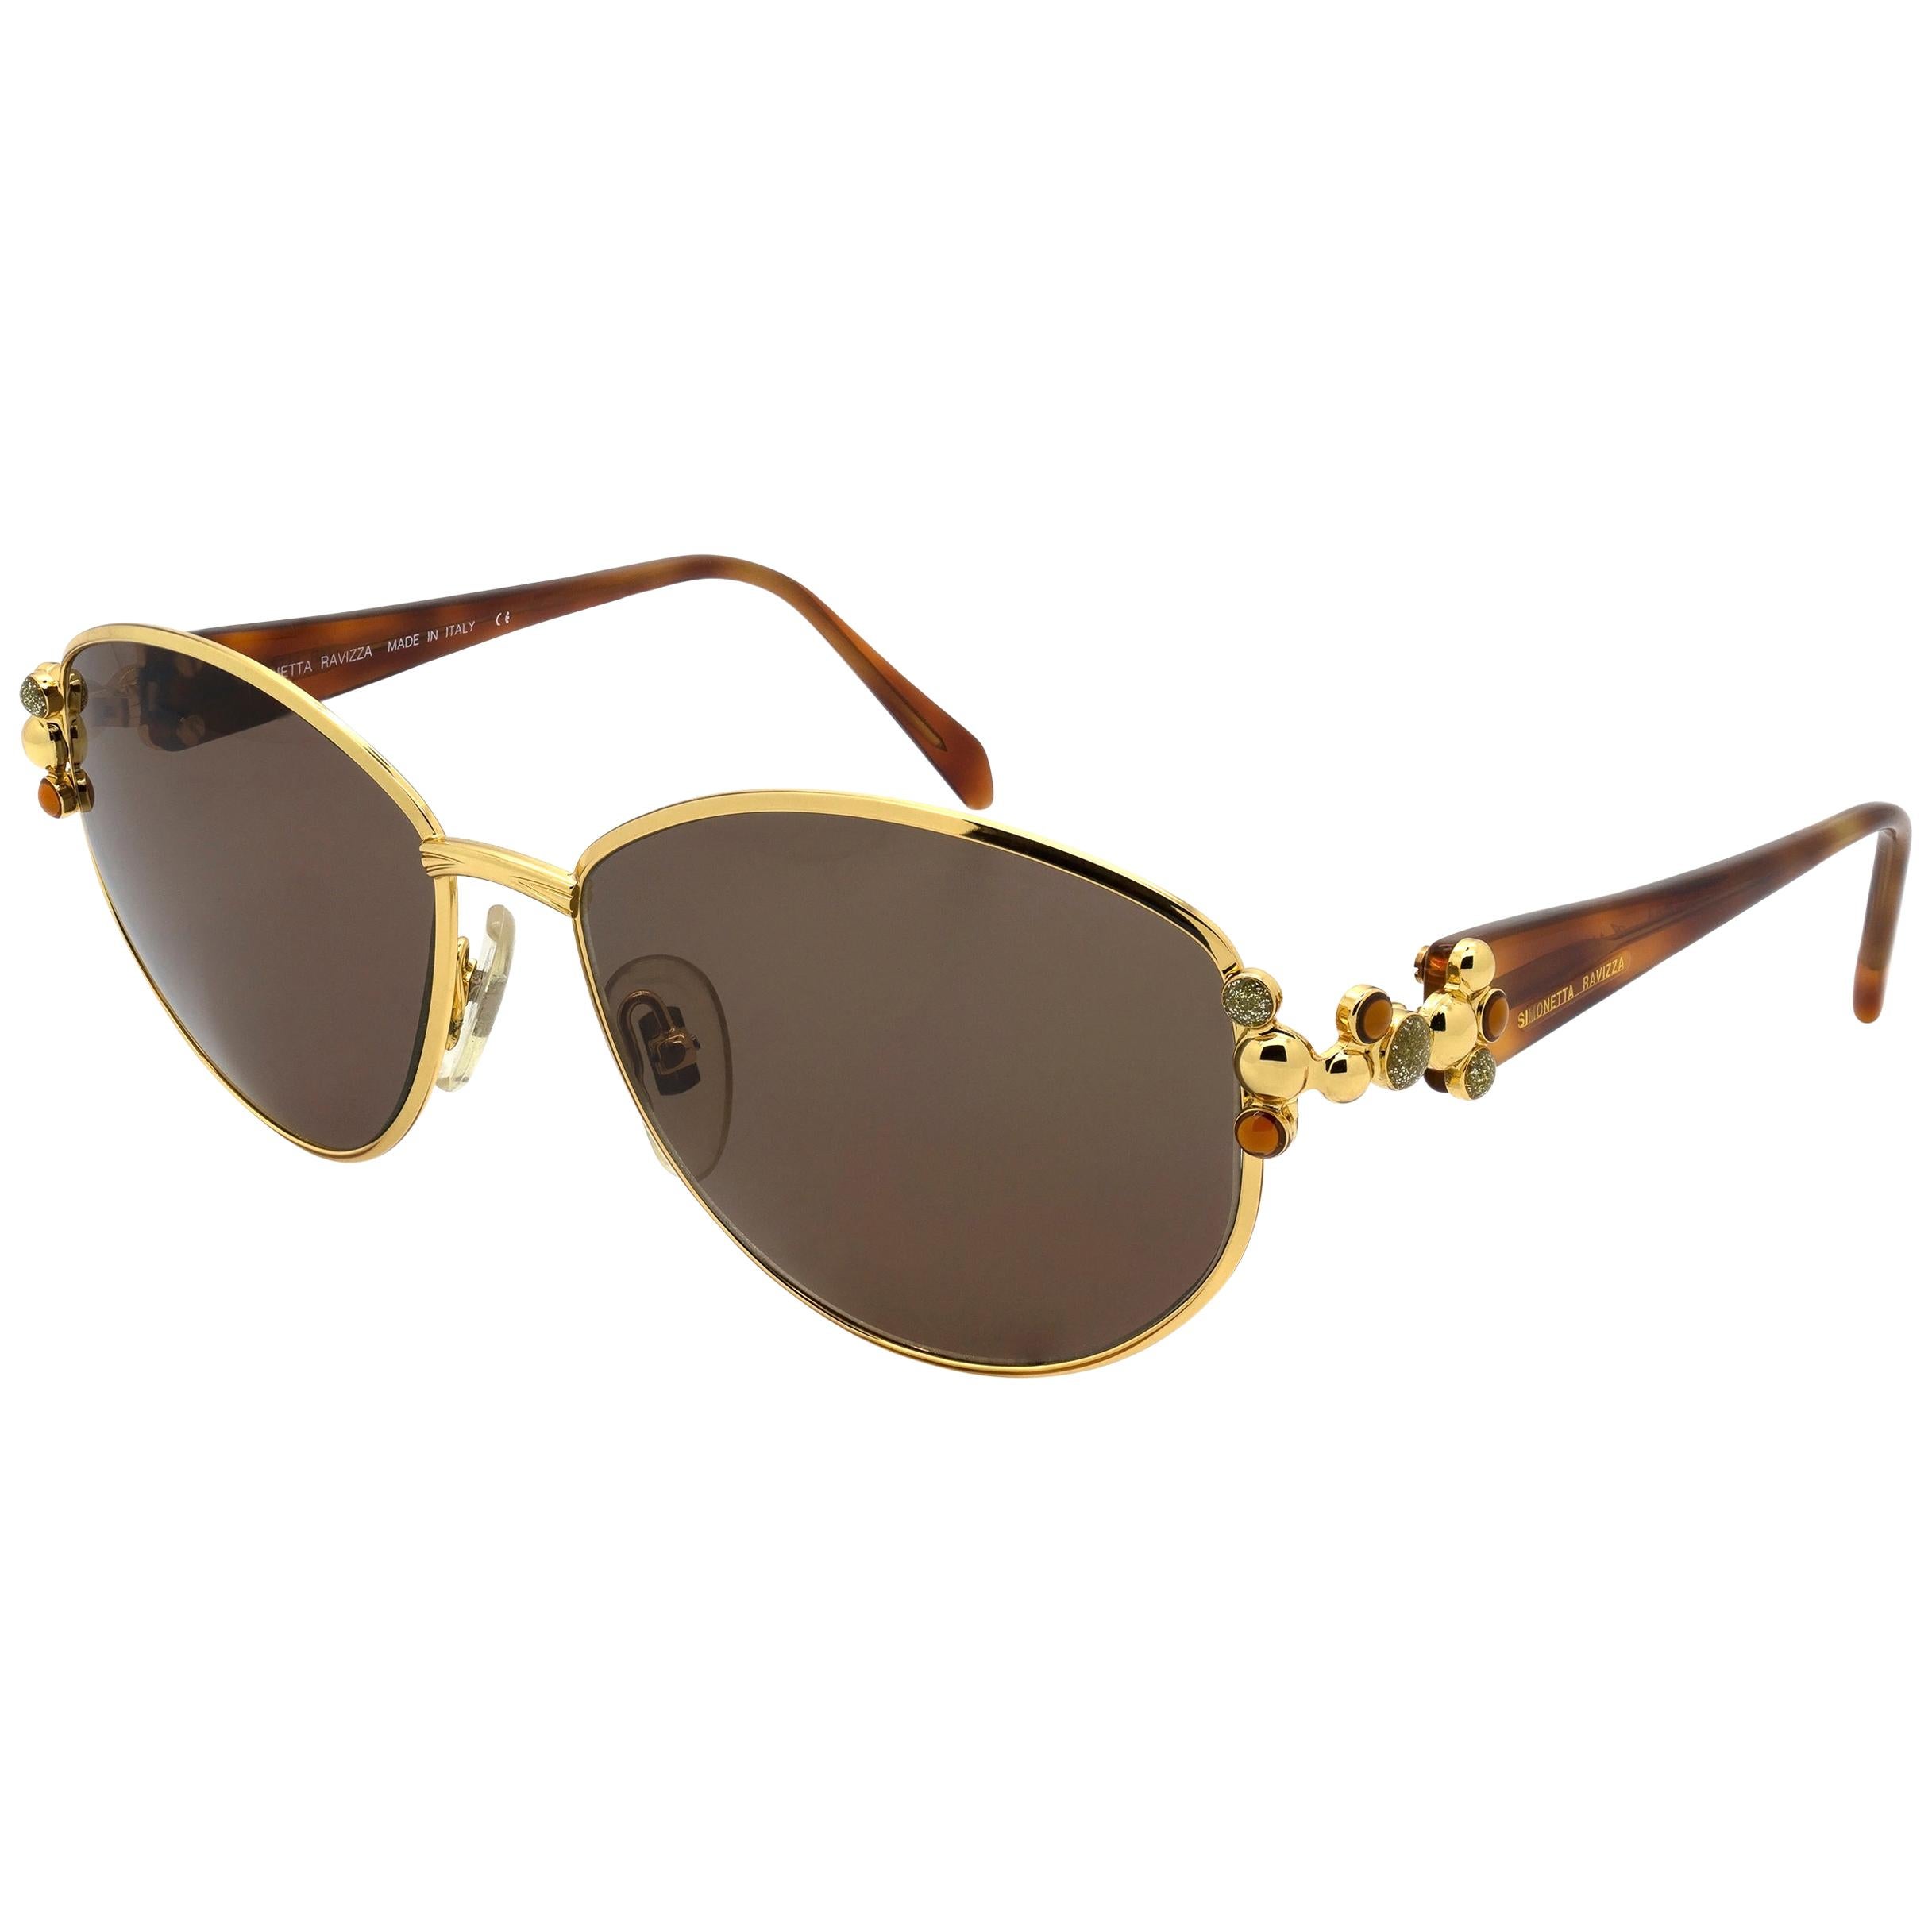 Simonetta Ravizza jewelry vintage sunglasses